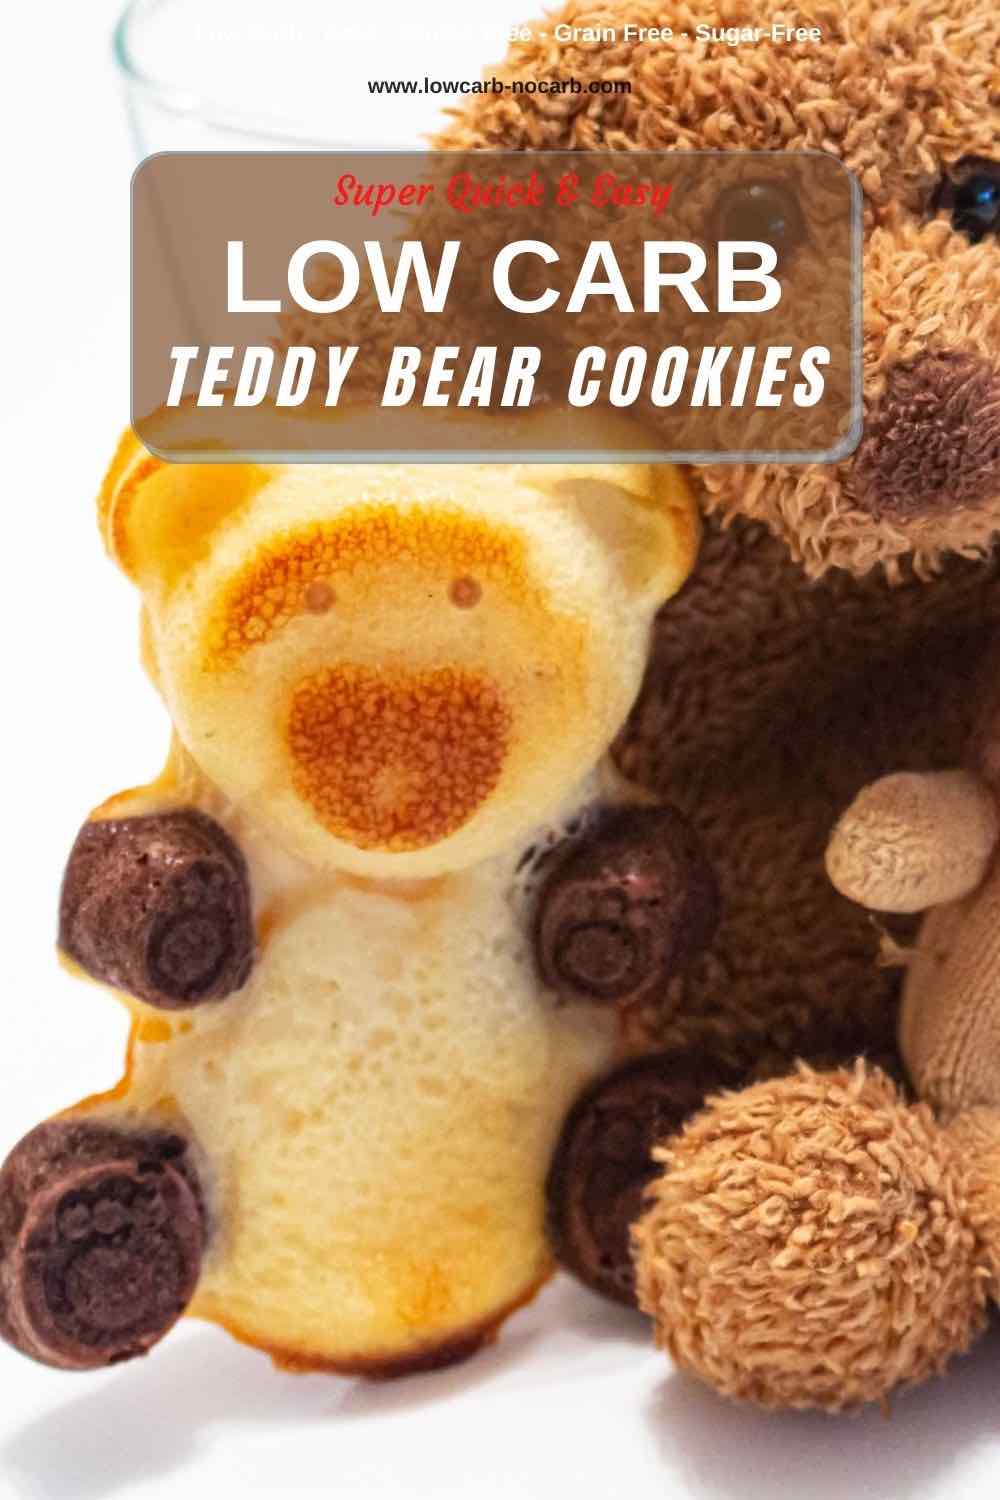 Low carb teddy bear cookies.